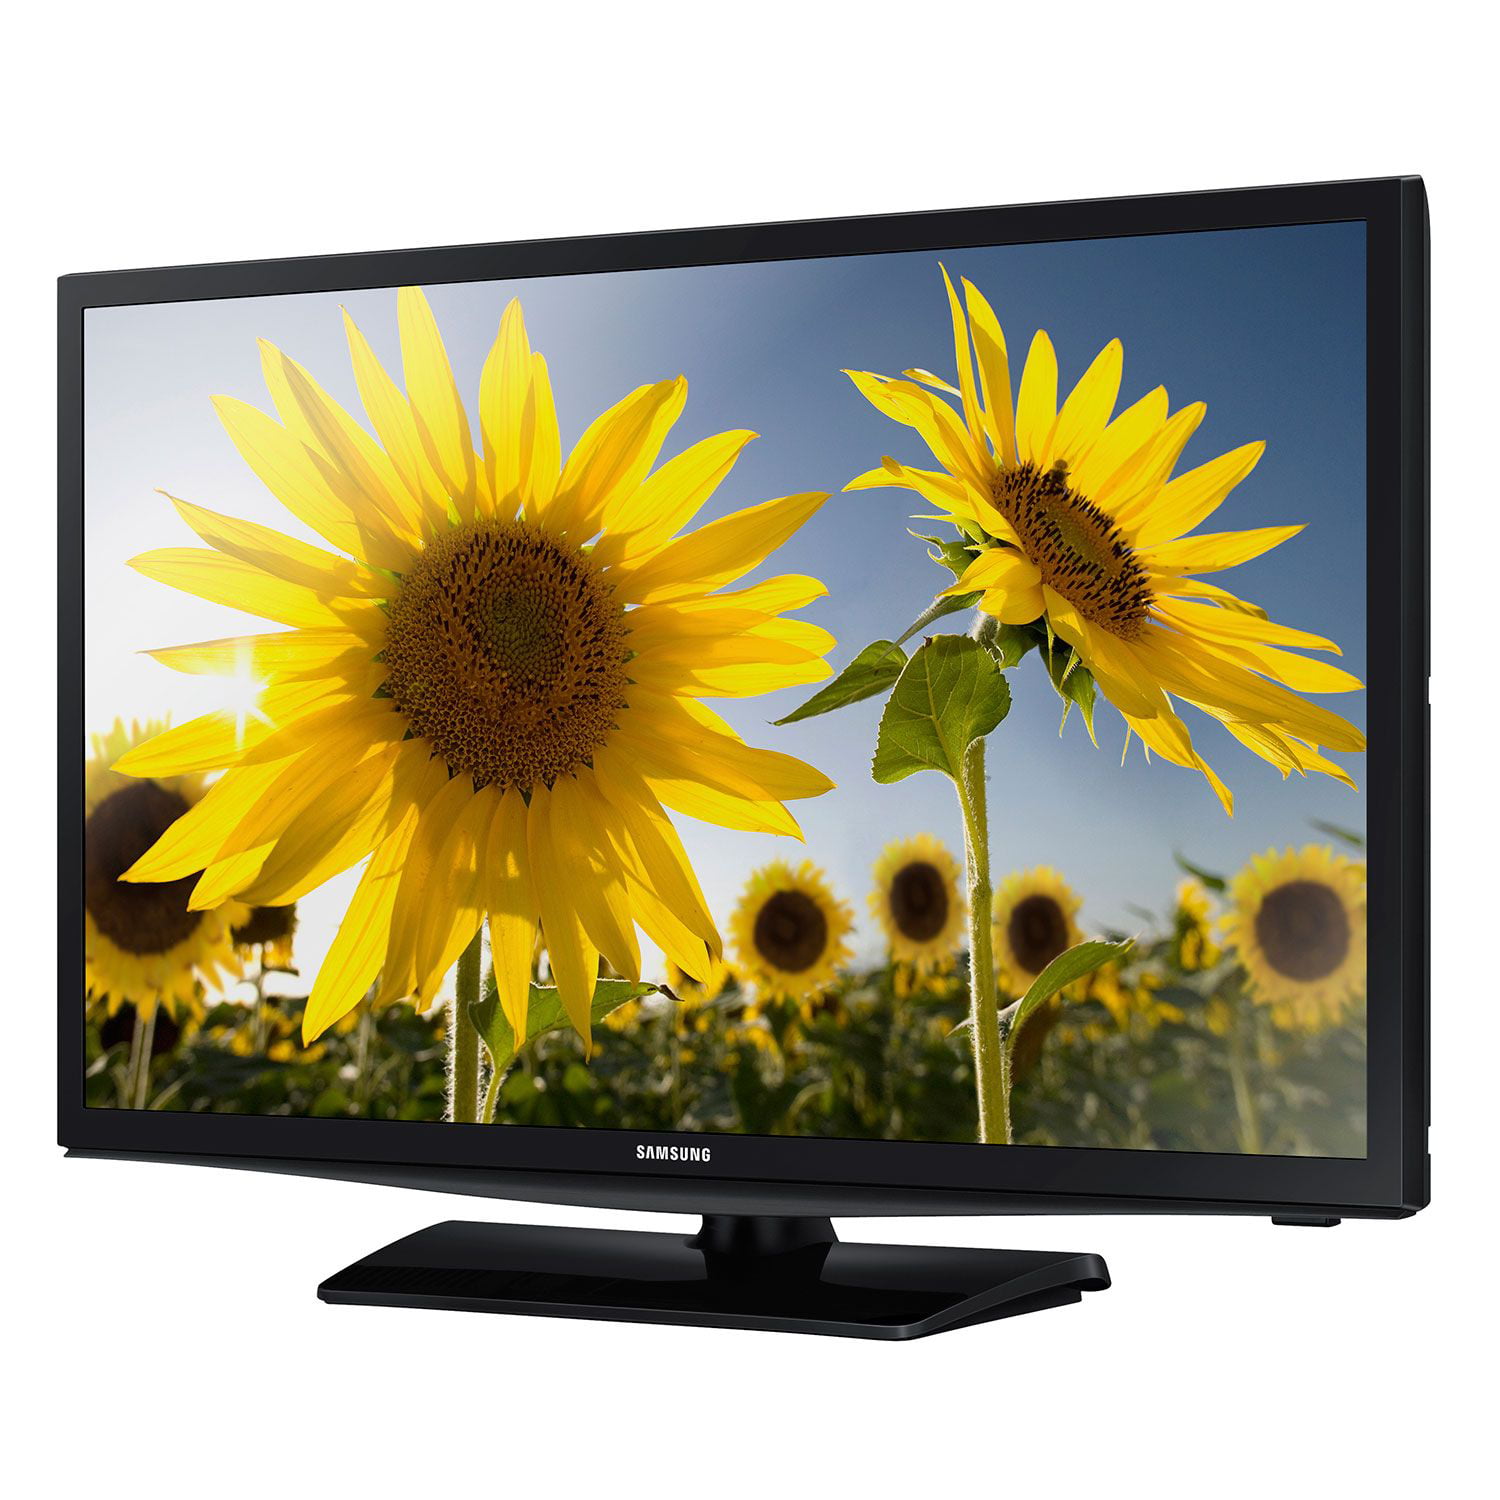 Anonym Daddy terrorisme SAMSUNG 24" Class HD (720P) LED TV (UN24H4500) - Walmart.com